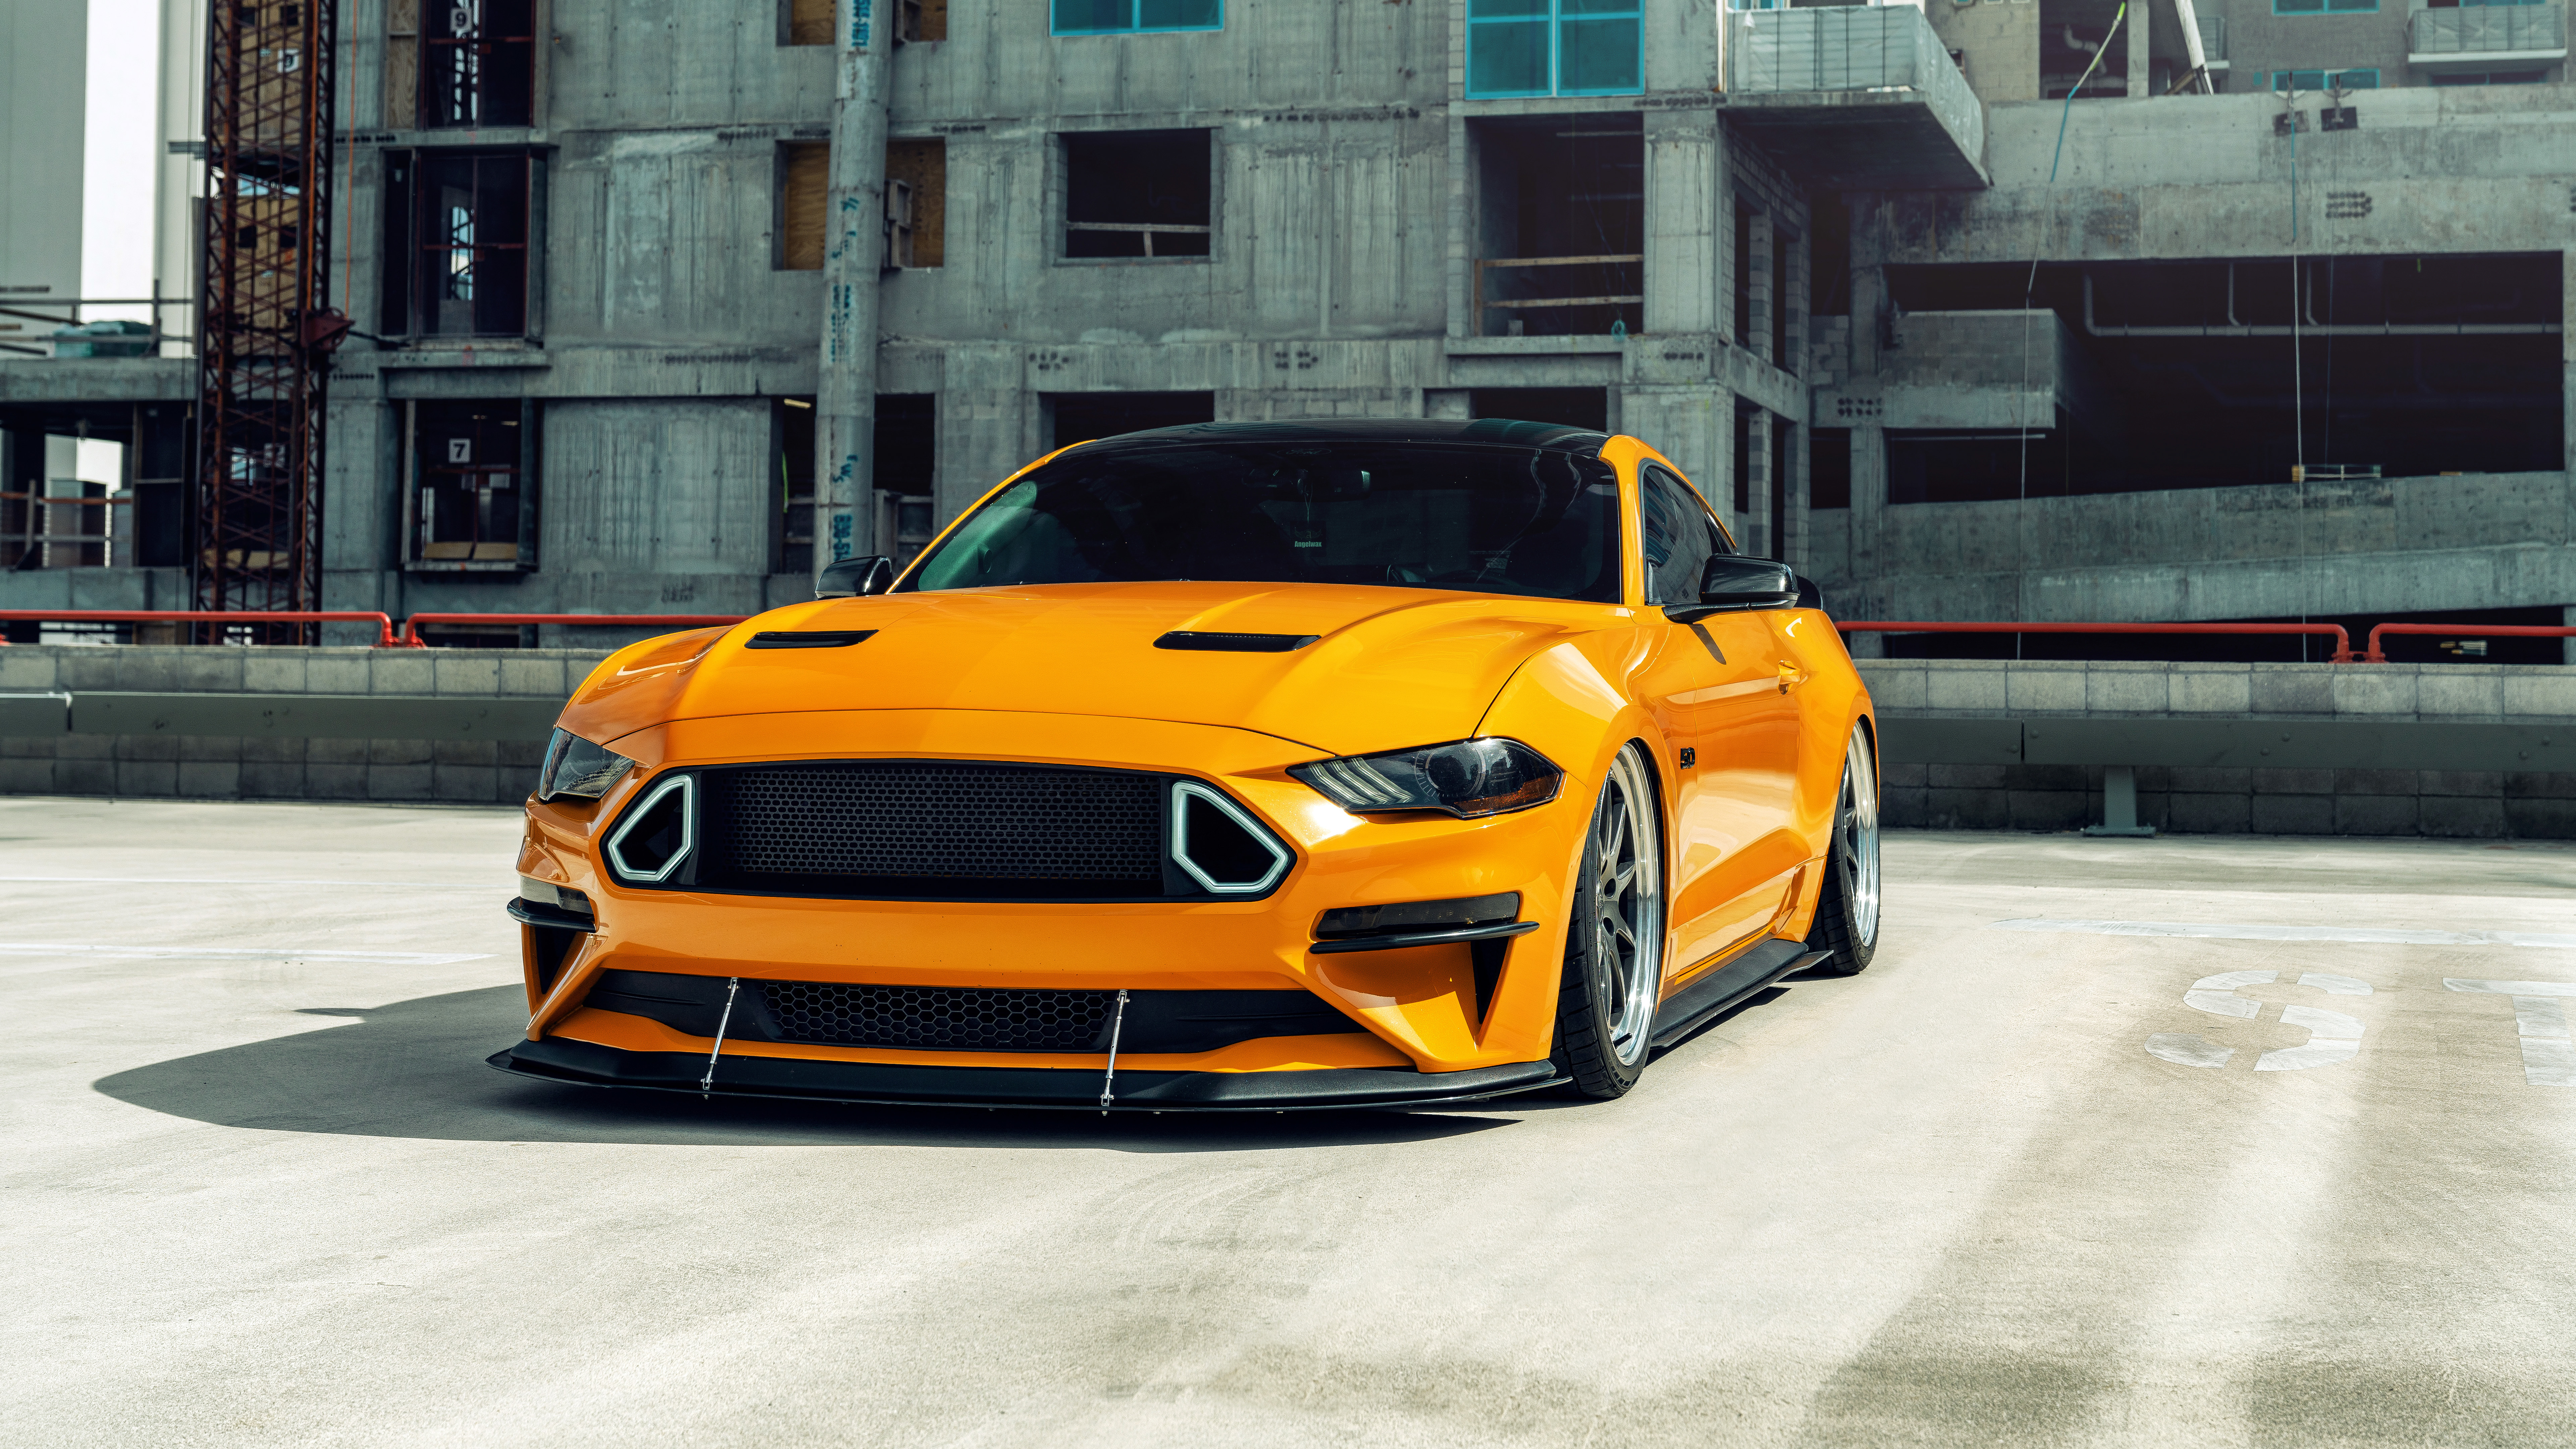 Yellow Ford Mustang GT, 2020, 7680x4320, 8k wallpaper